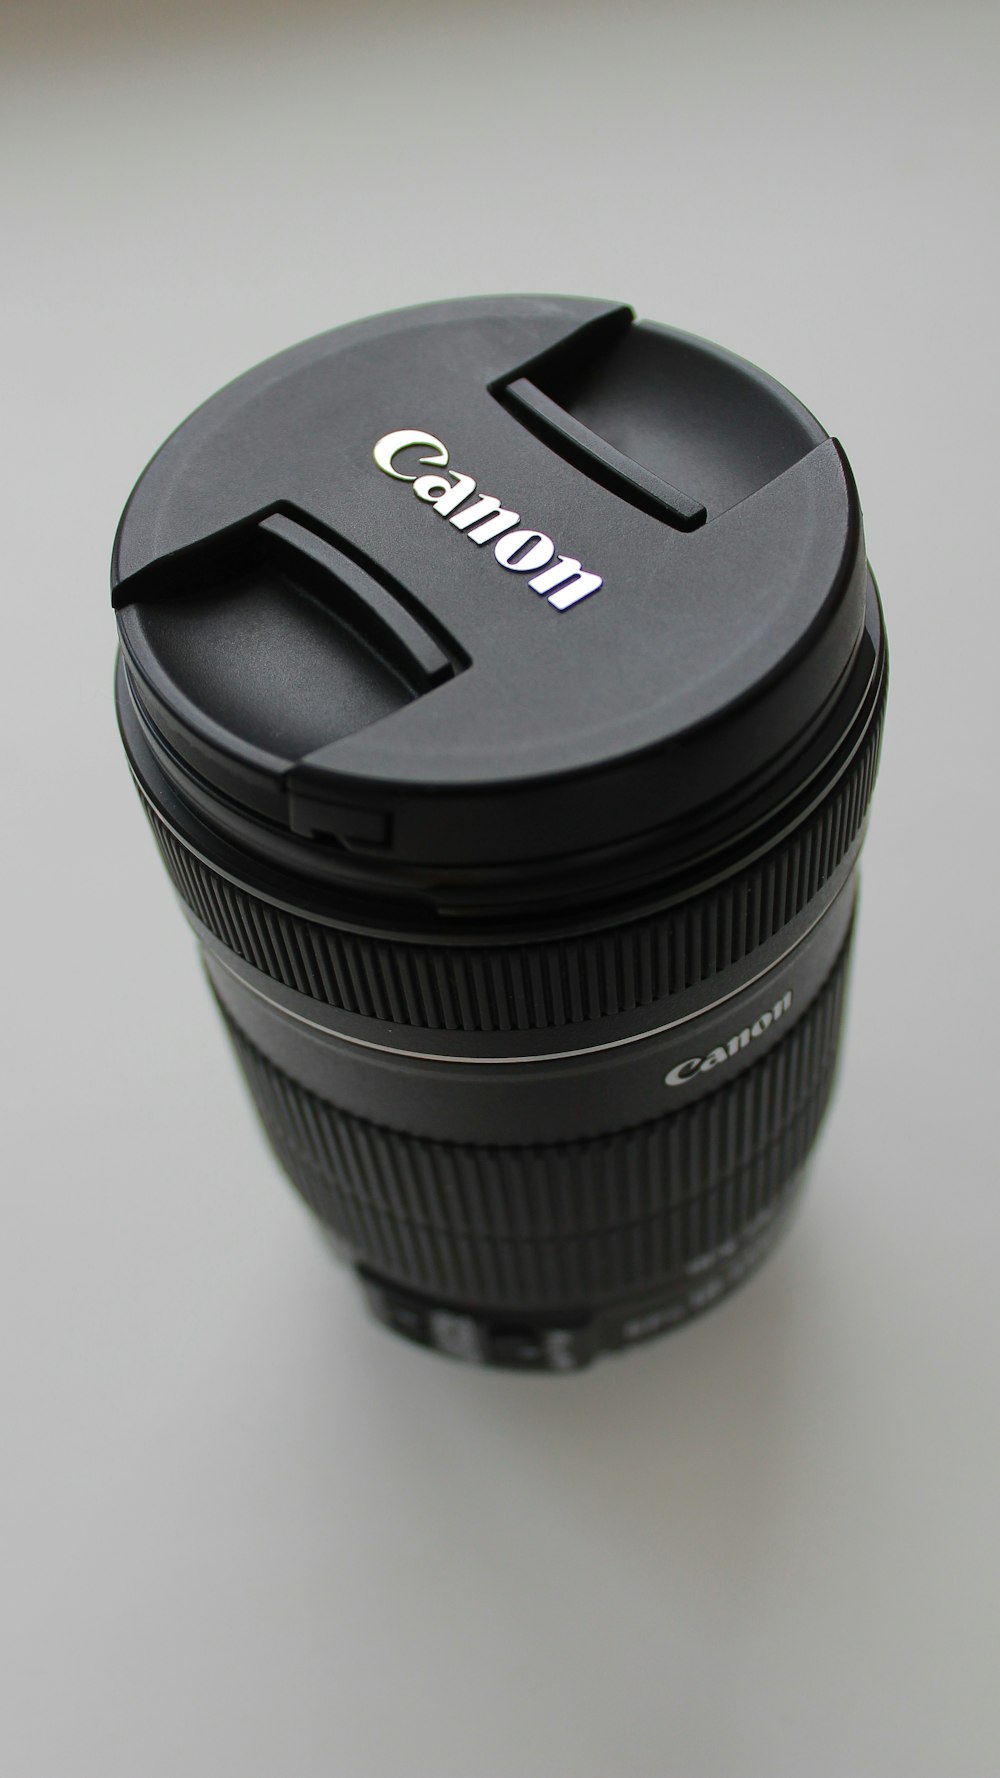 lente da câmera Canon DSLR preta no tampo branco da mesa